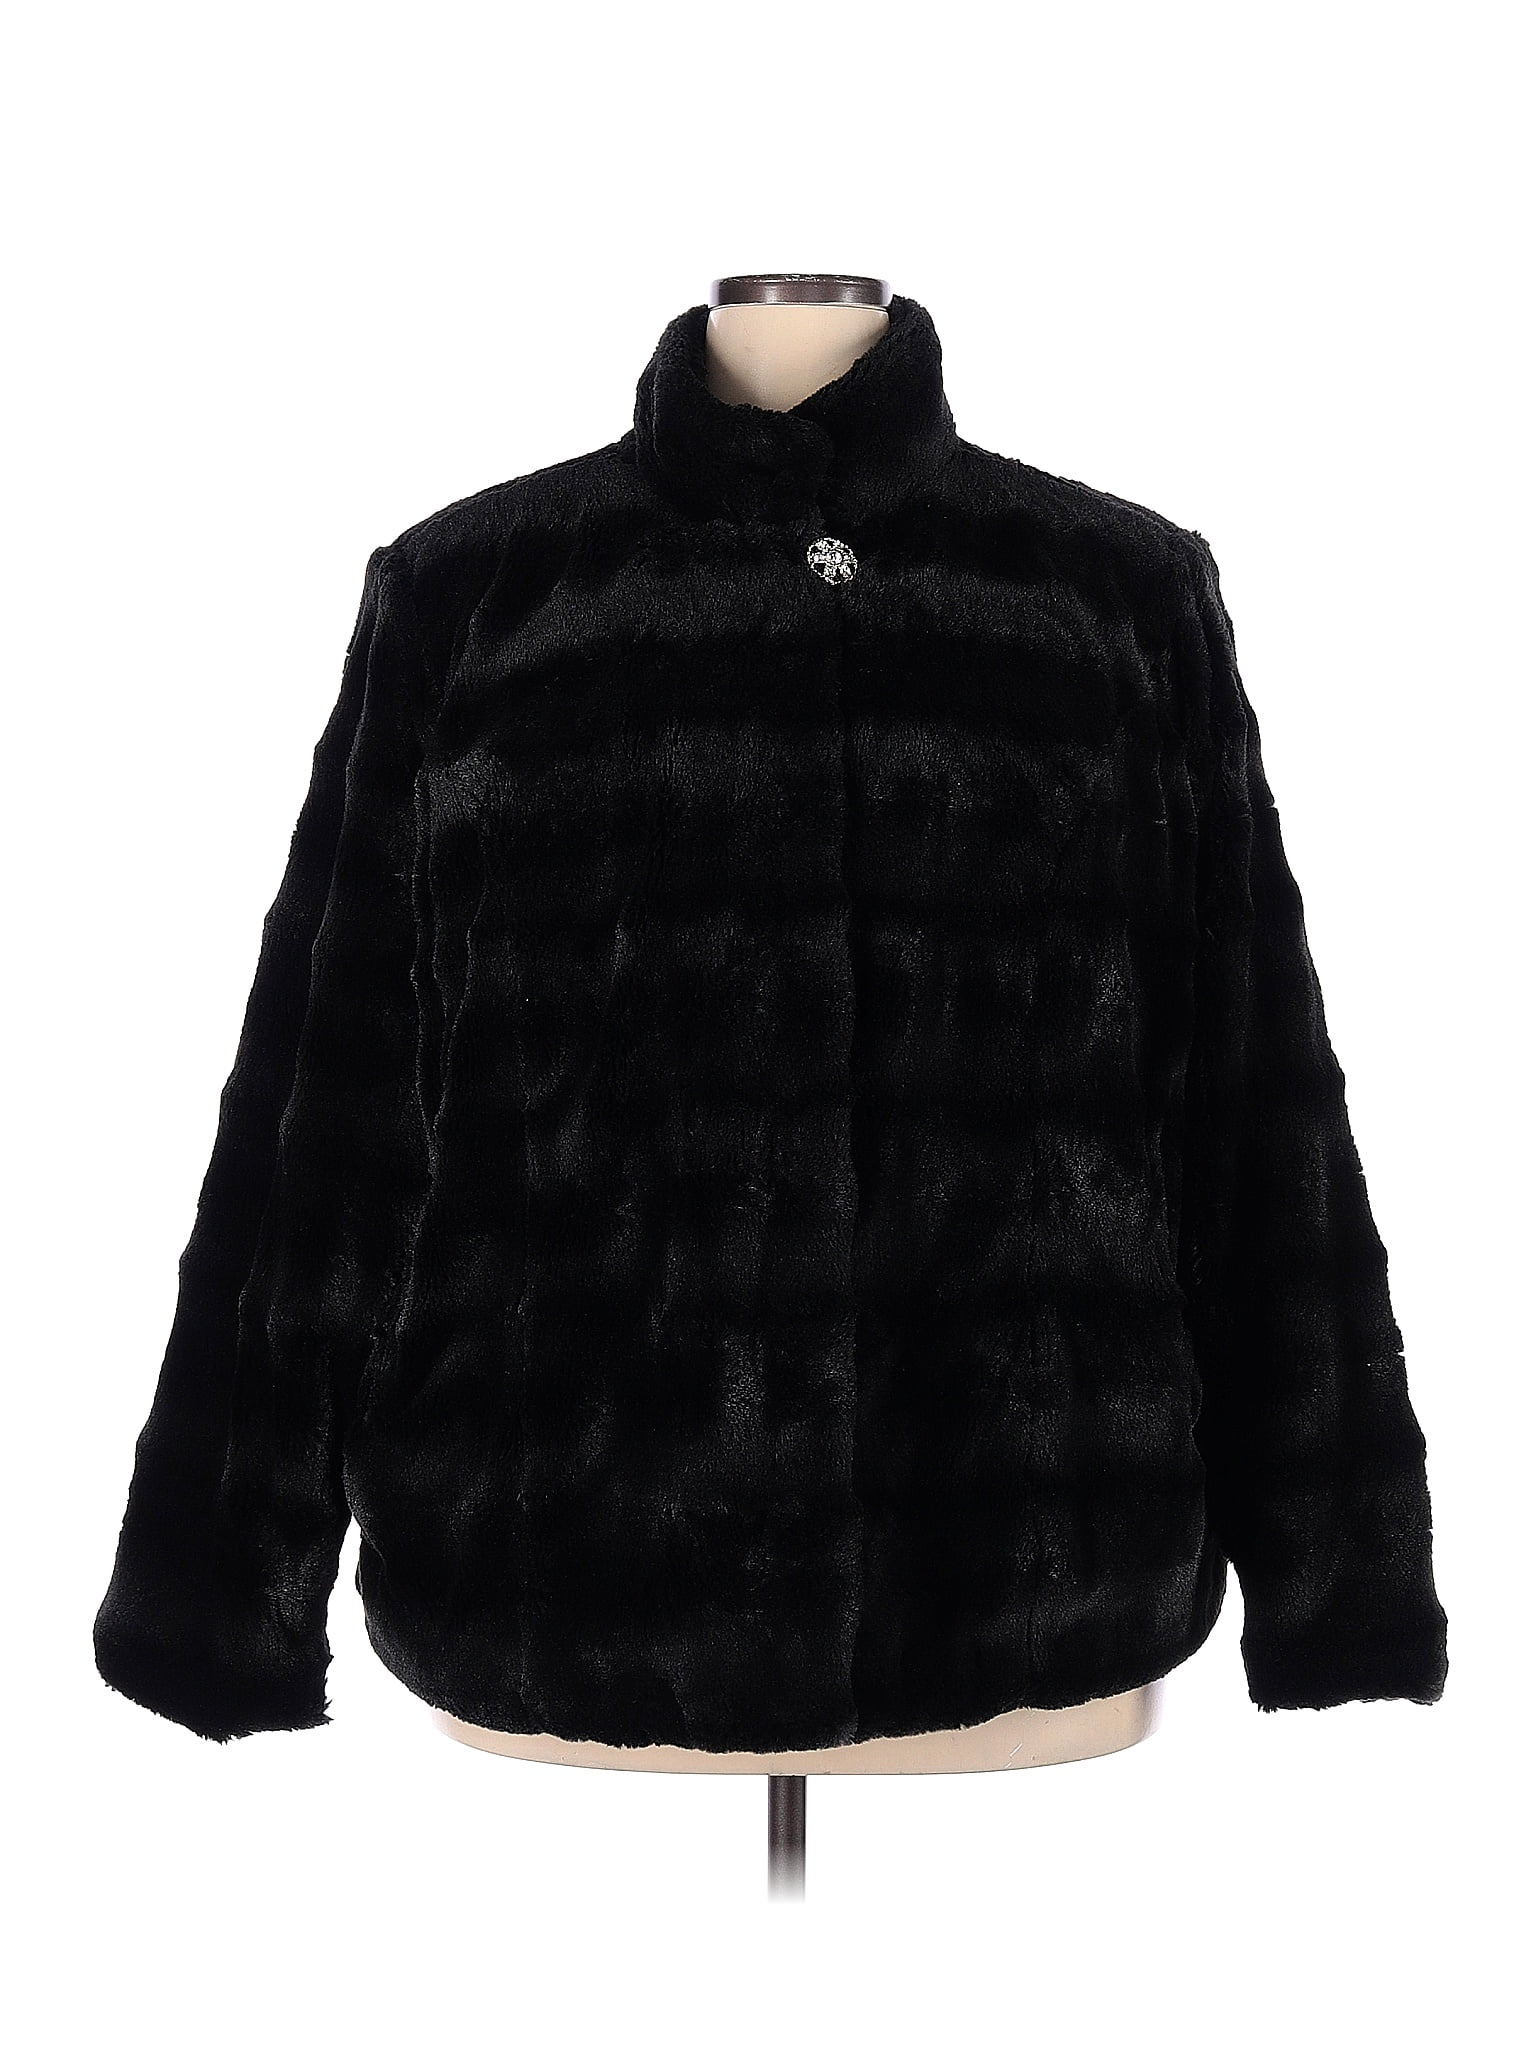 Dennis by Dennis Basso 100% Polyester Solid Black Faux Fur Jacket Size ...